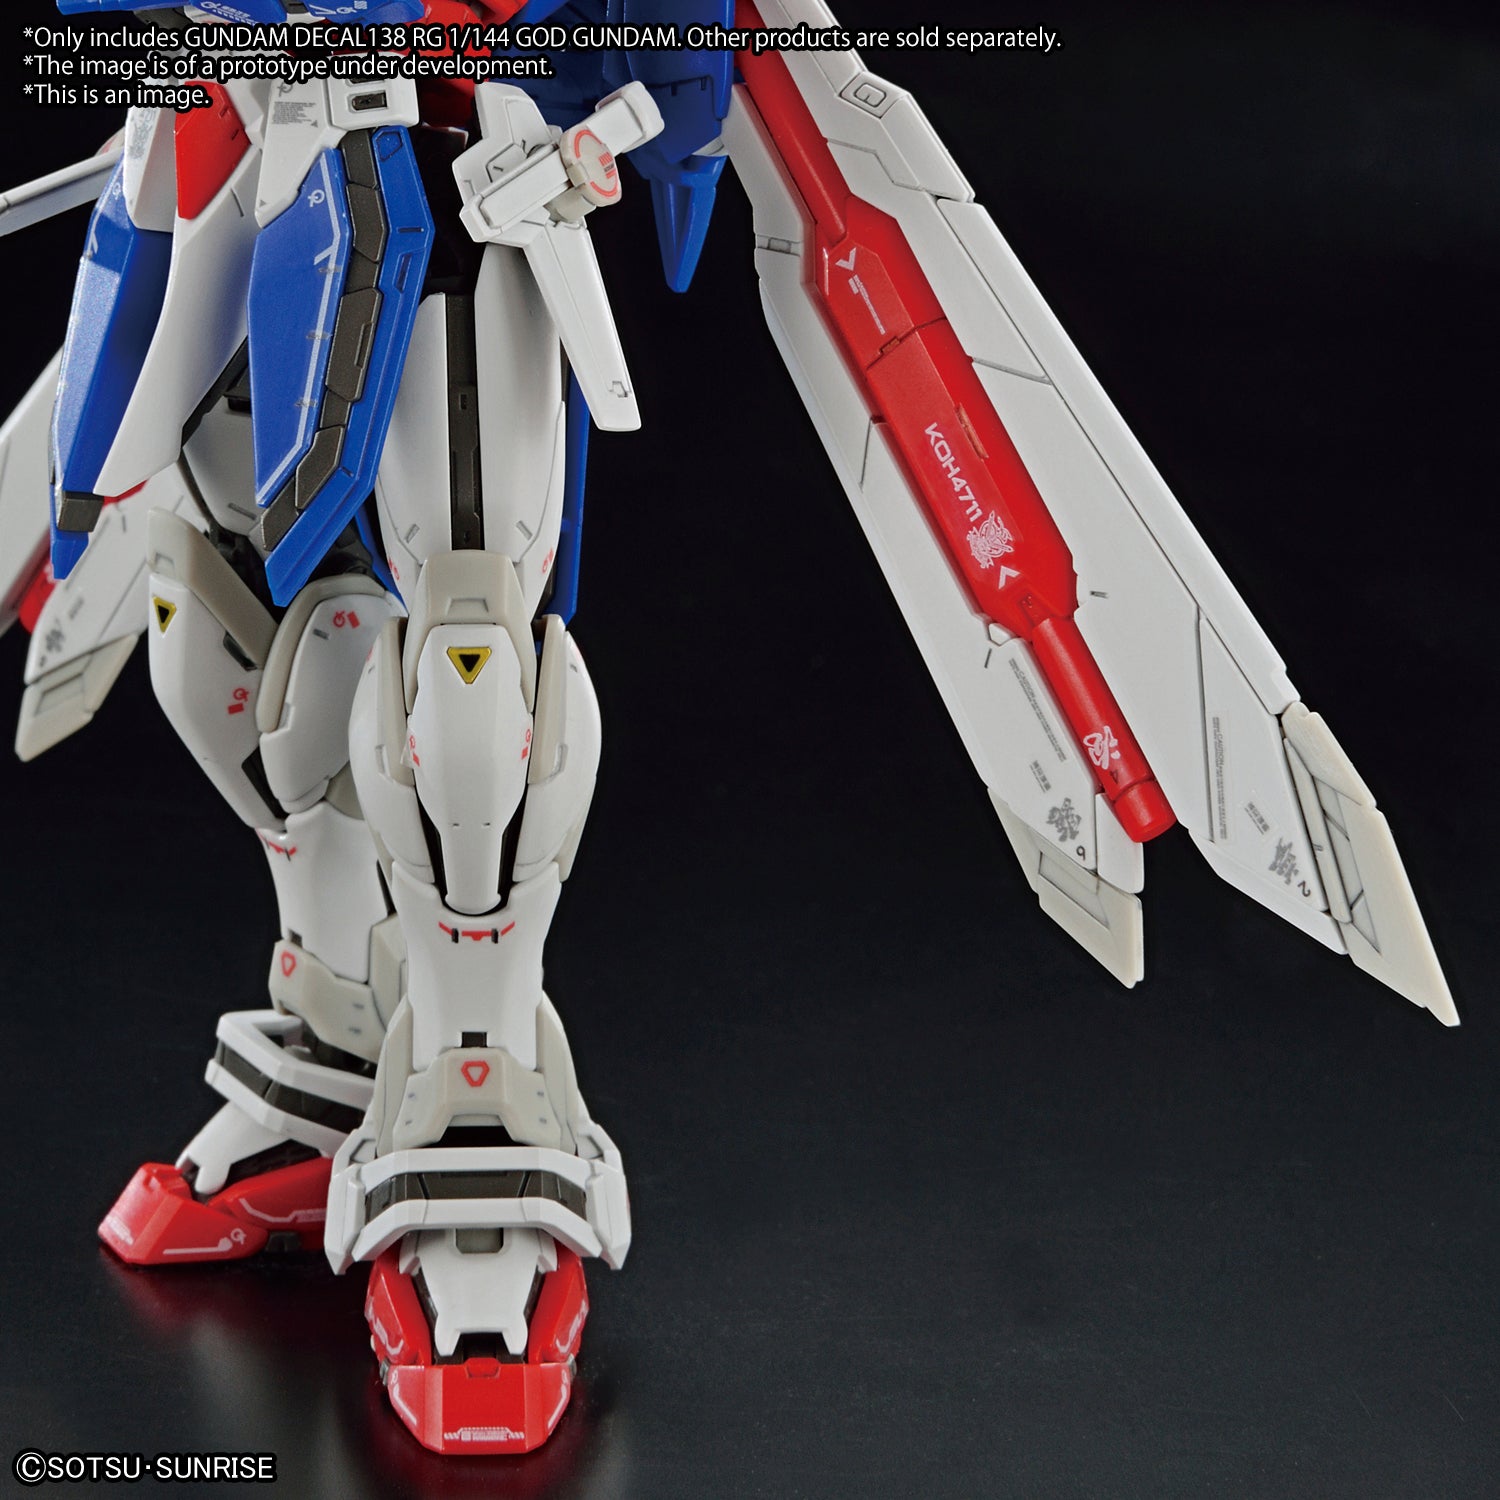 Gundam Decal No.138 RG 1/144 God Gundam